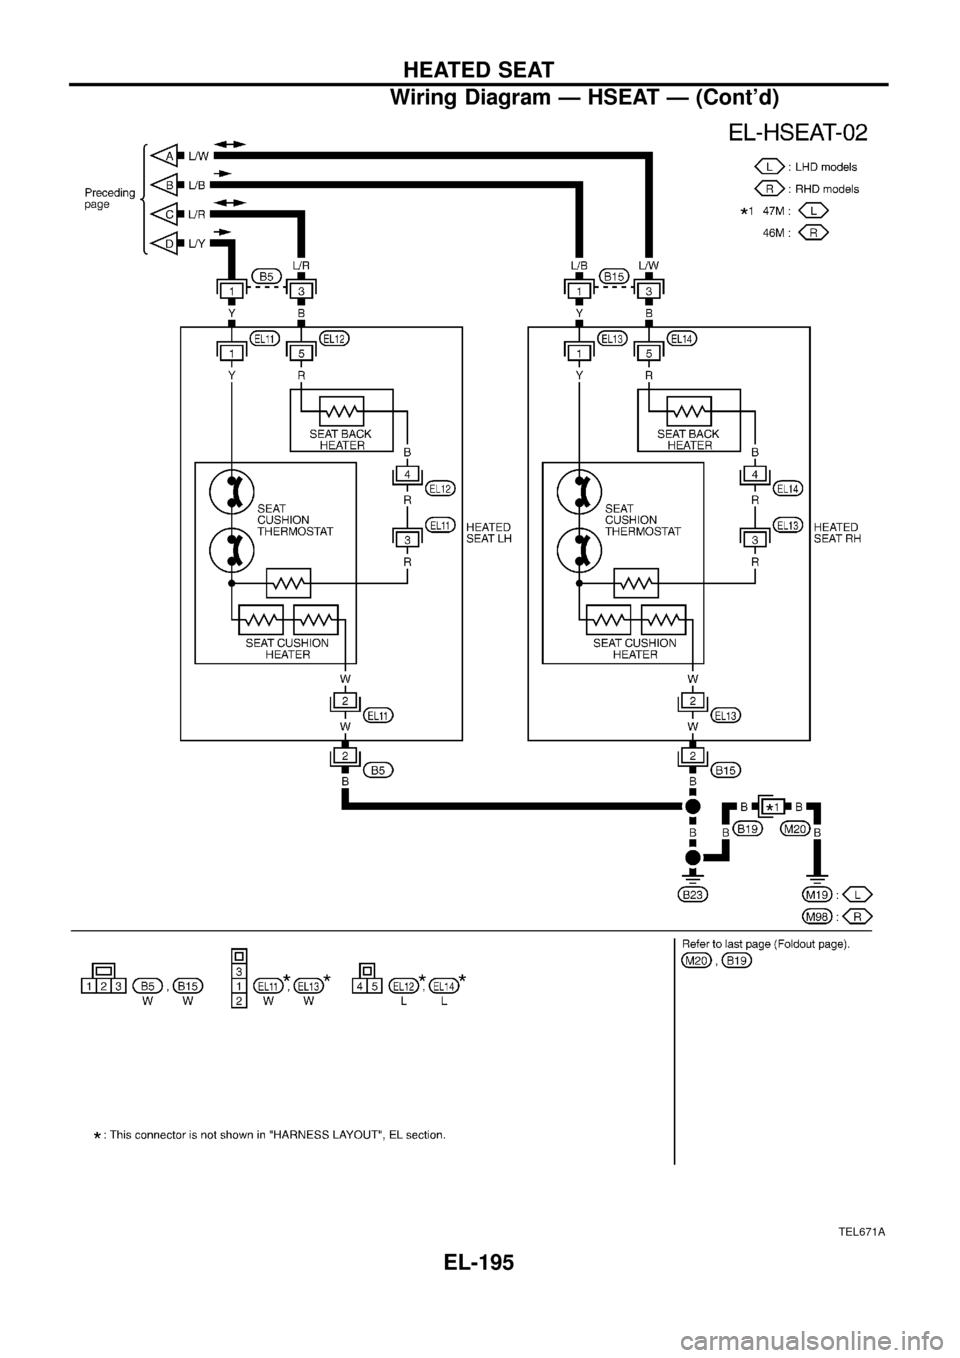 NISSAN PATROL 1998 Y61 / 5.G Electrical System Workshop Manual TEL671A
HEATED SEAT
Wiring Diagram Ð HSEAT Ð (Contd)
EL-195 